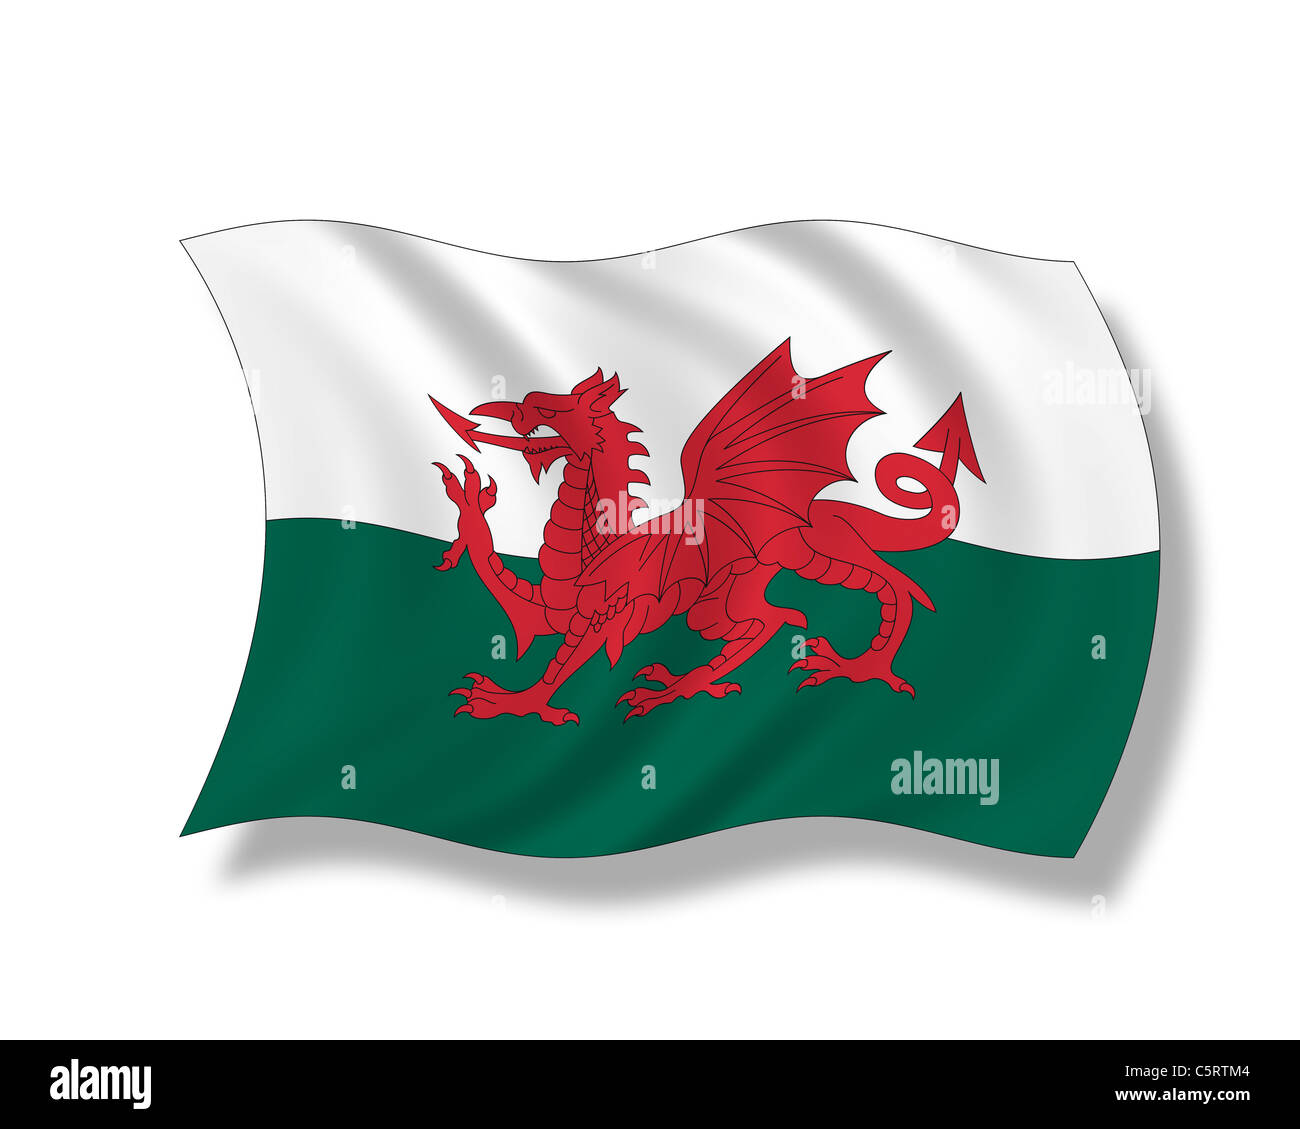 Illustration, Flag of Wales Stock Photo